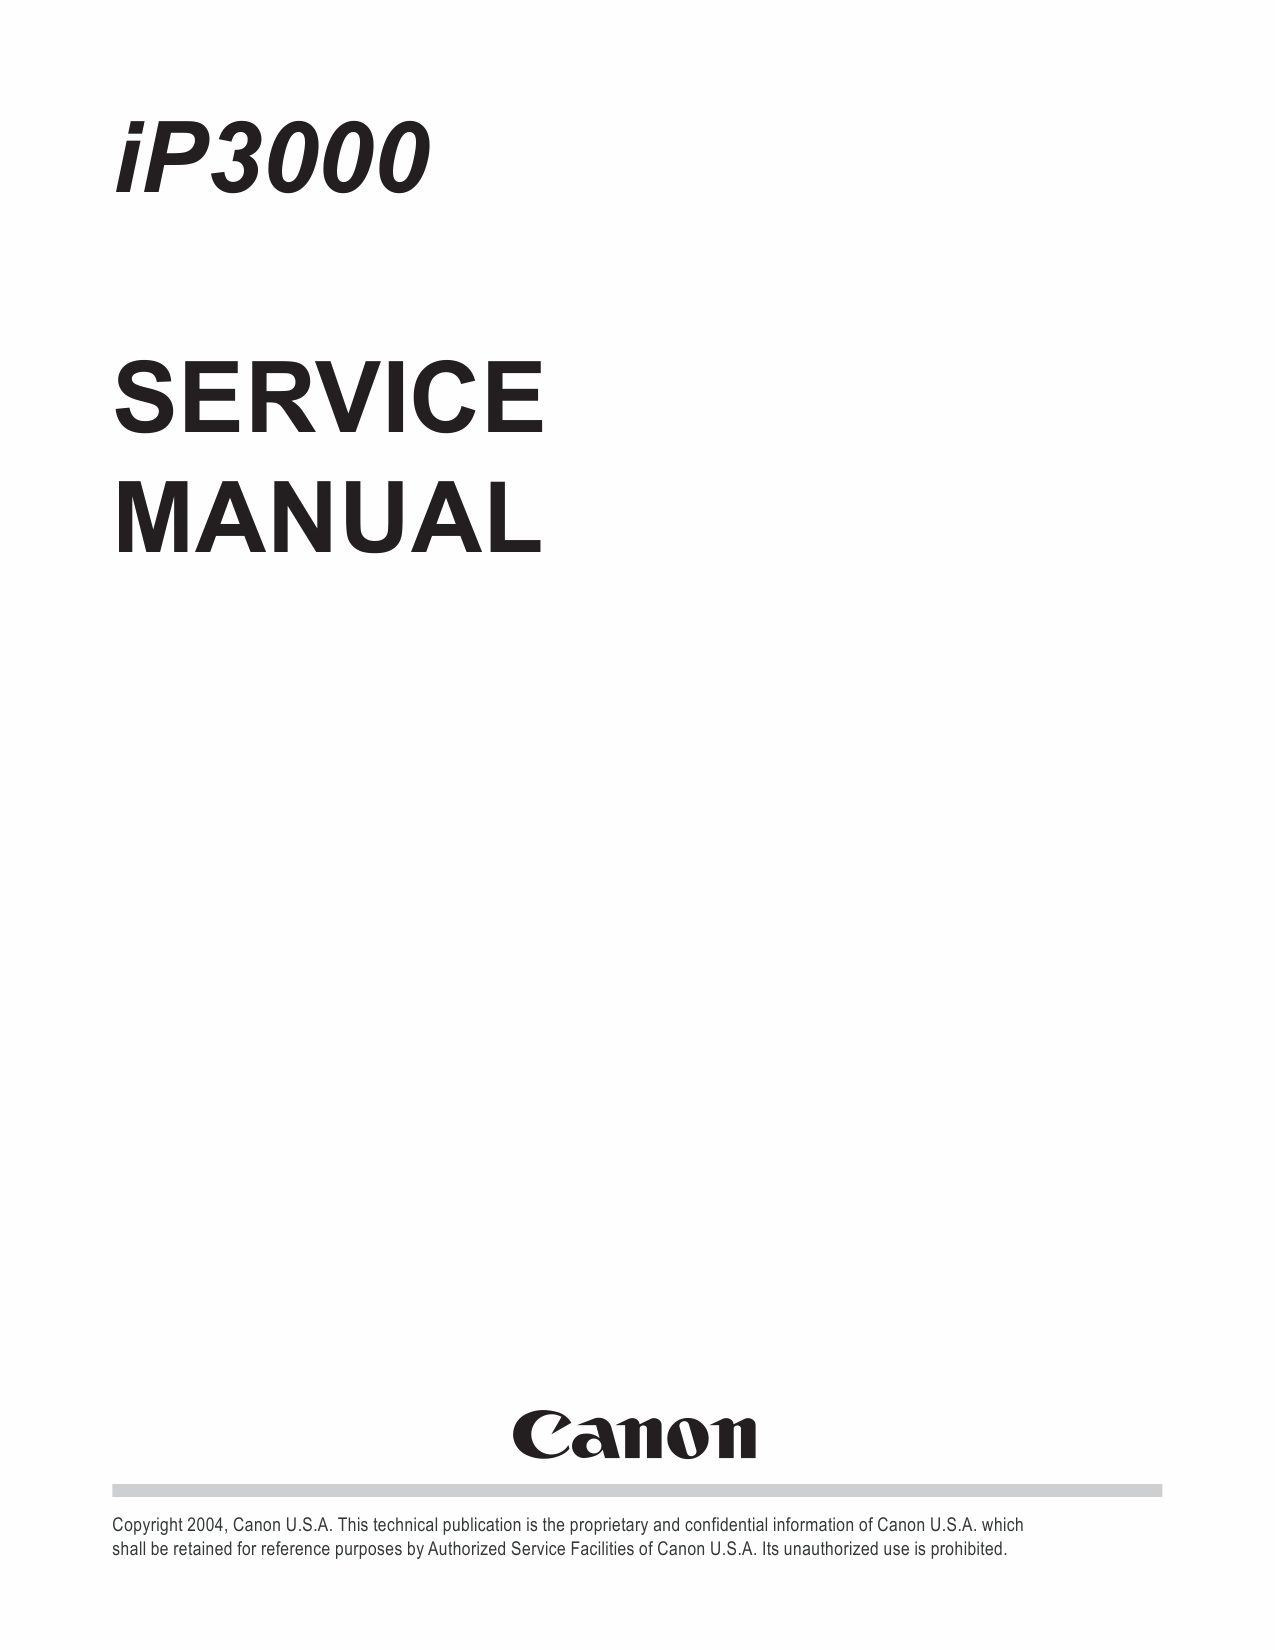 Canon PIXMA iP3000 Service Manual-1